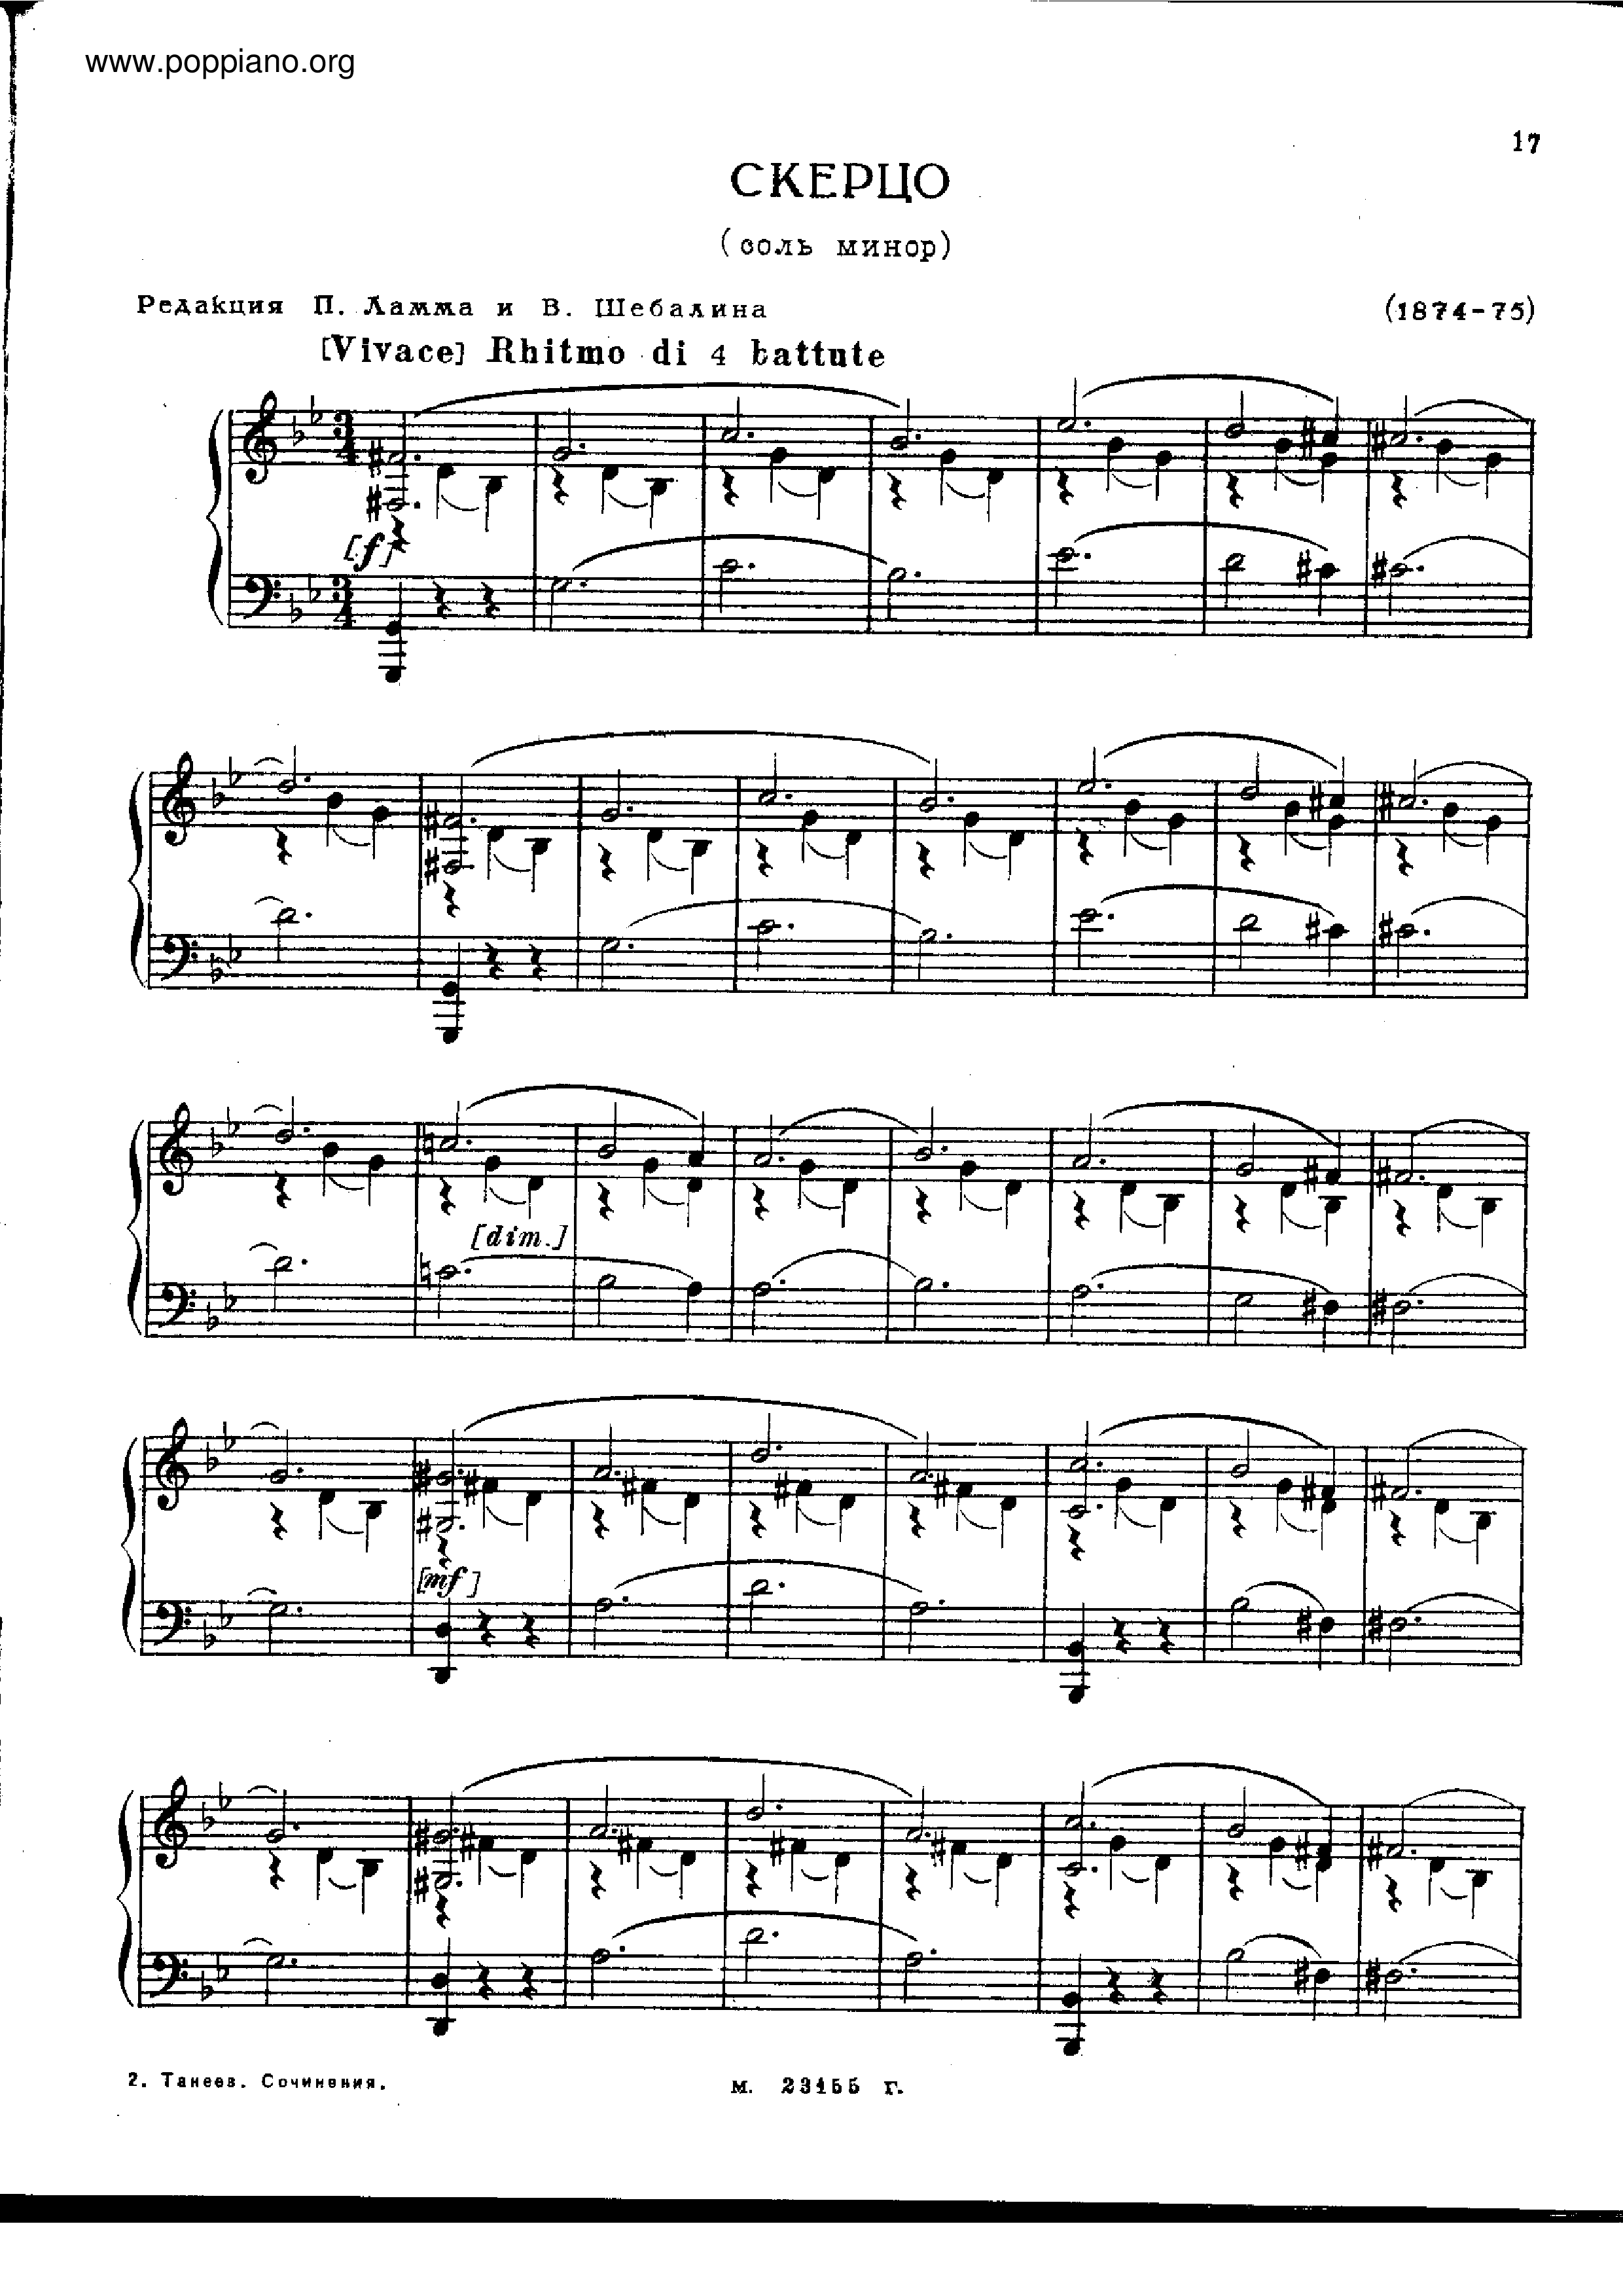 No.3 in G minor琴譜